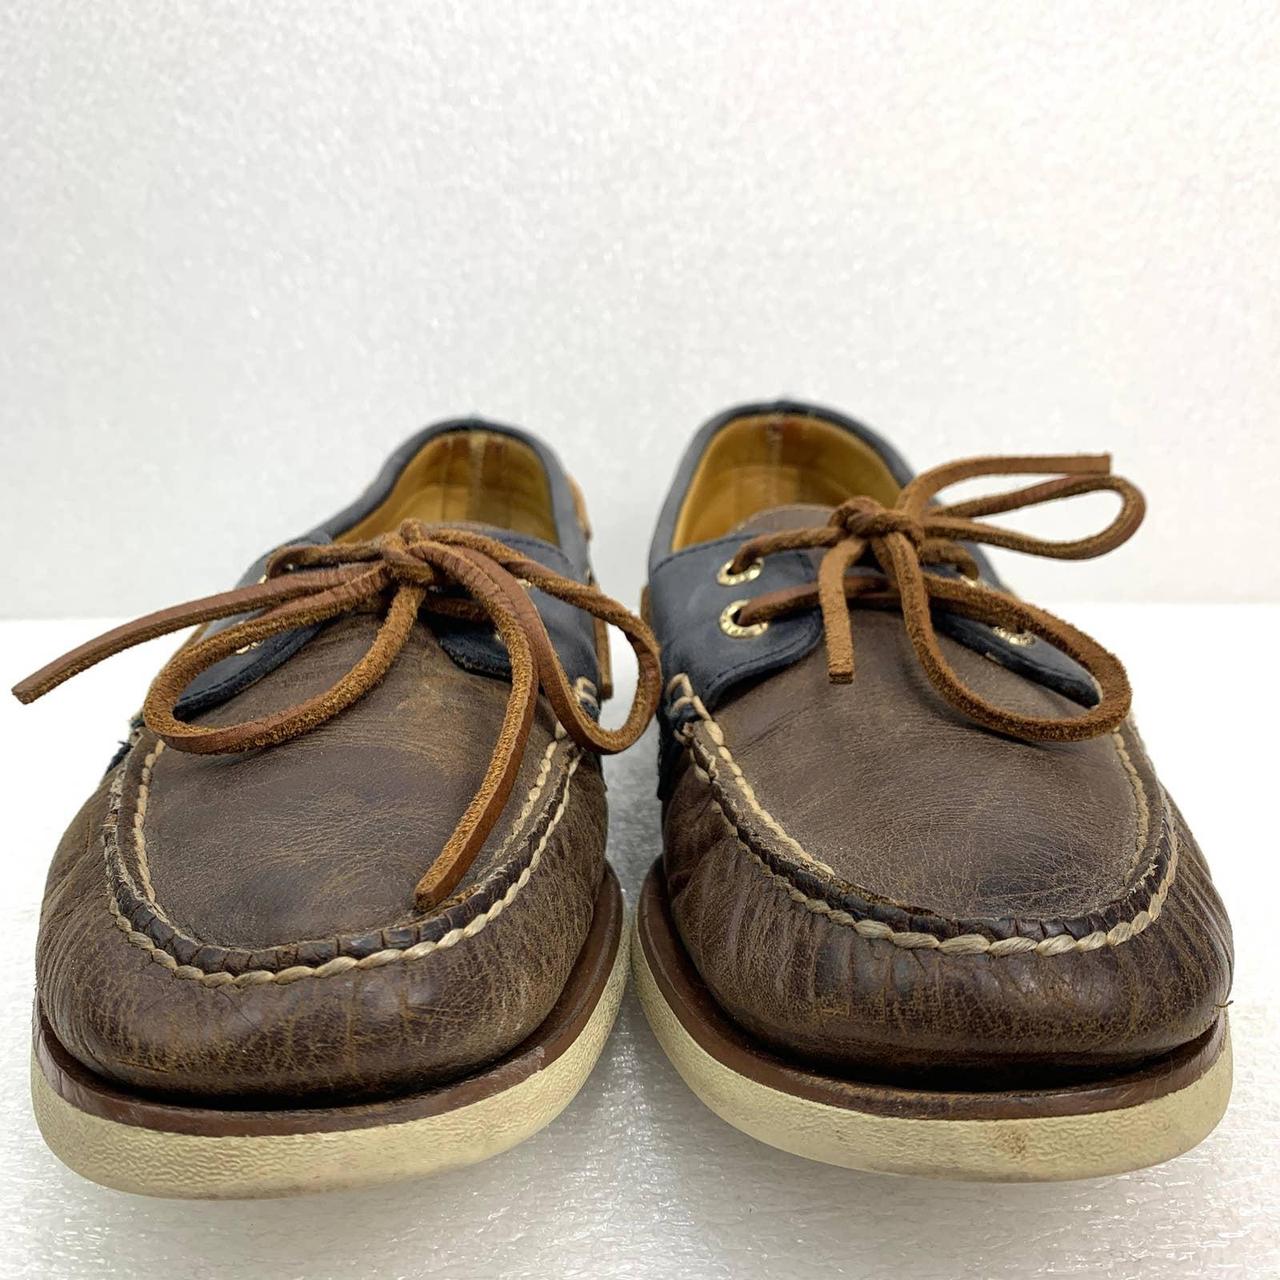 Sperry Authentic Original 2-Eye Boat Shoes in Brown... - Depop